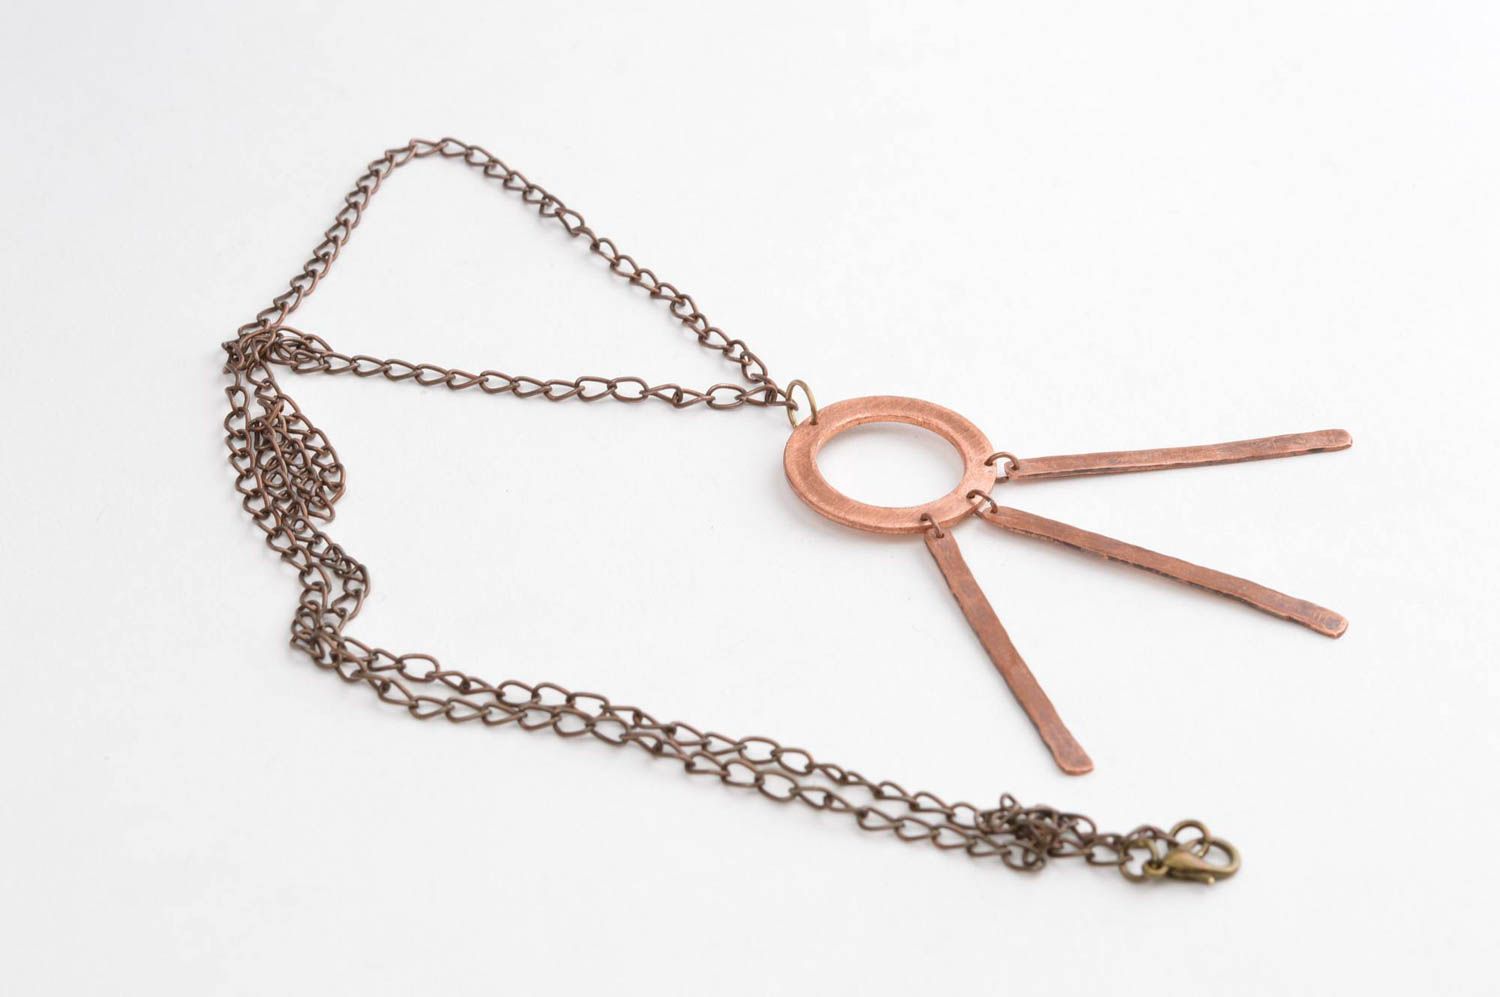 Copper pendant handmade pendant accessories for women beautiful pendant fashion  photo 4